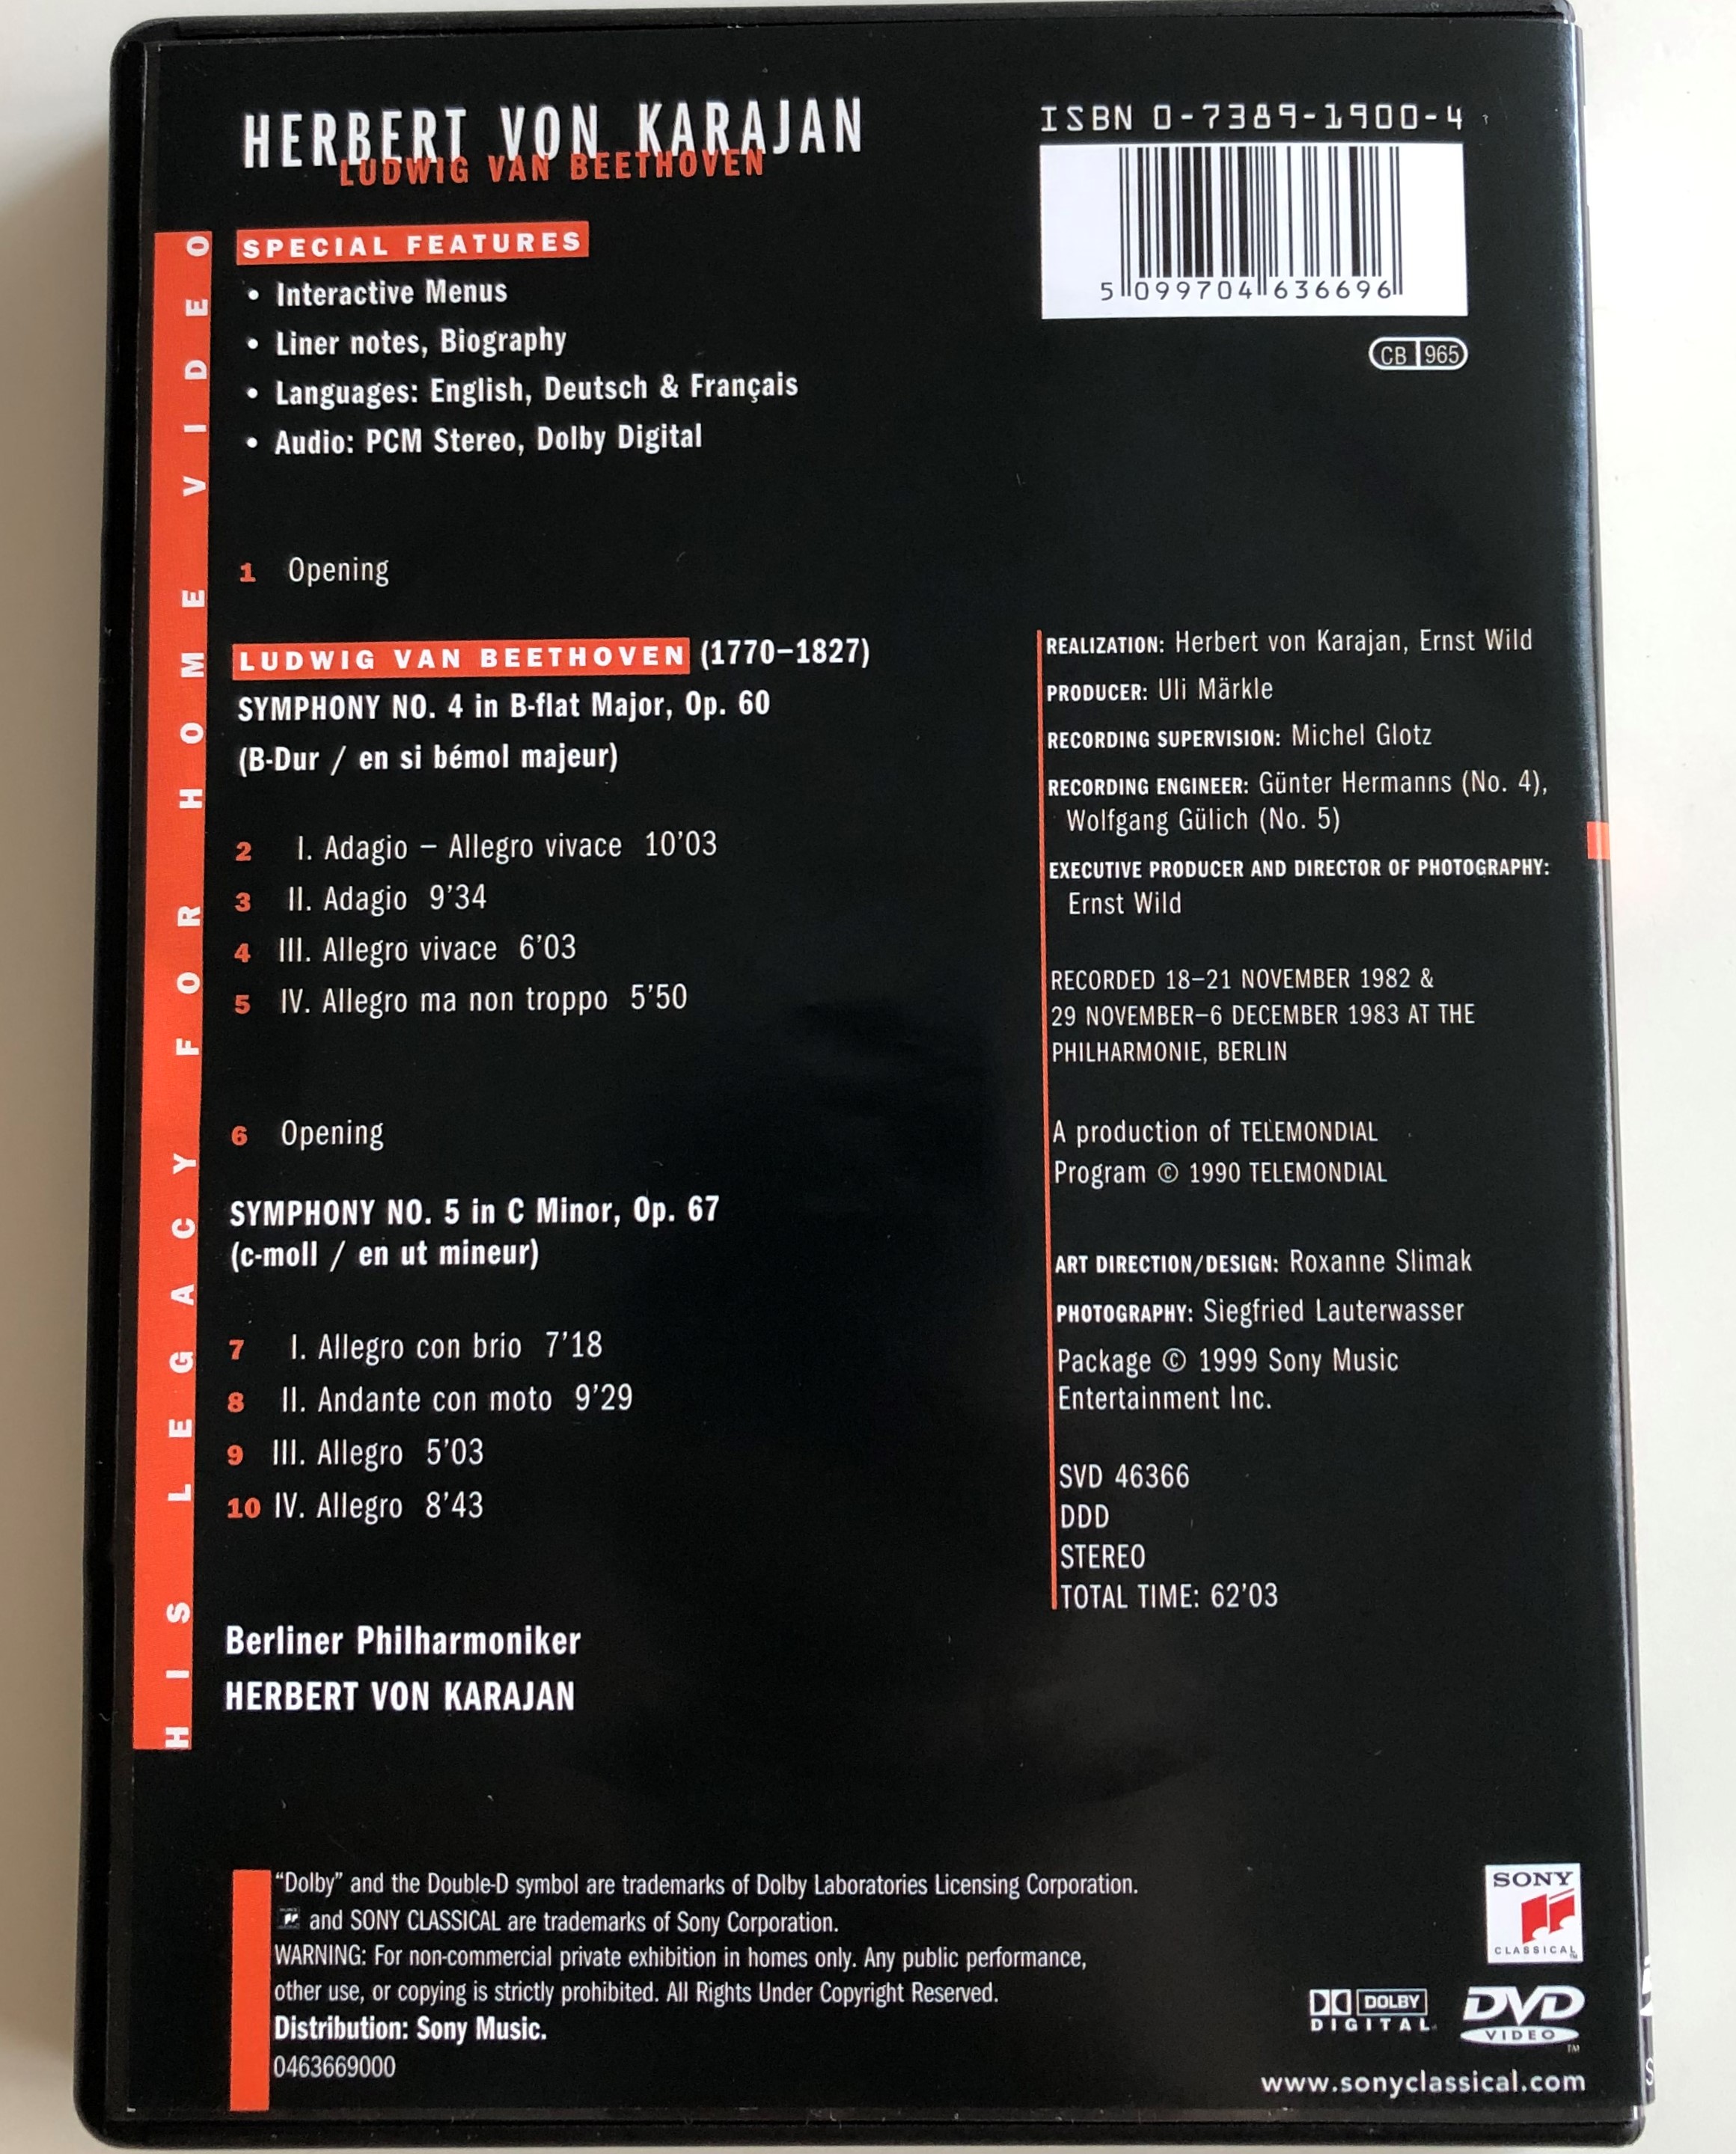 Herbert von Karajan DVD 1983 4.JPG